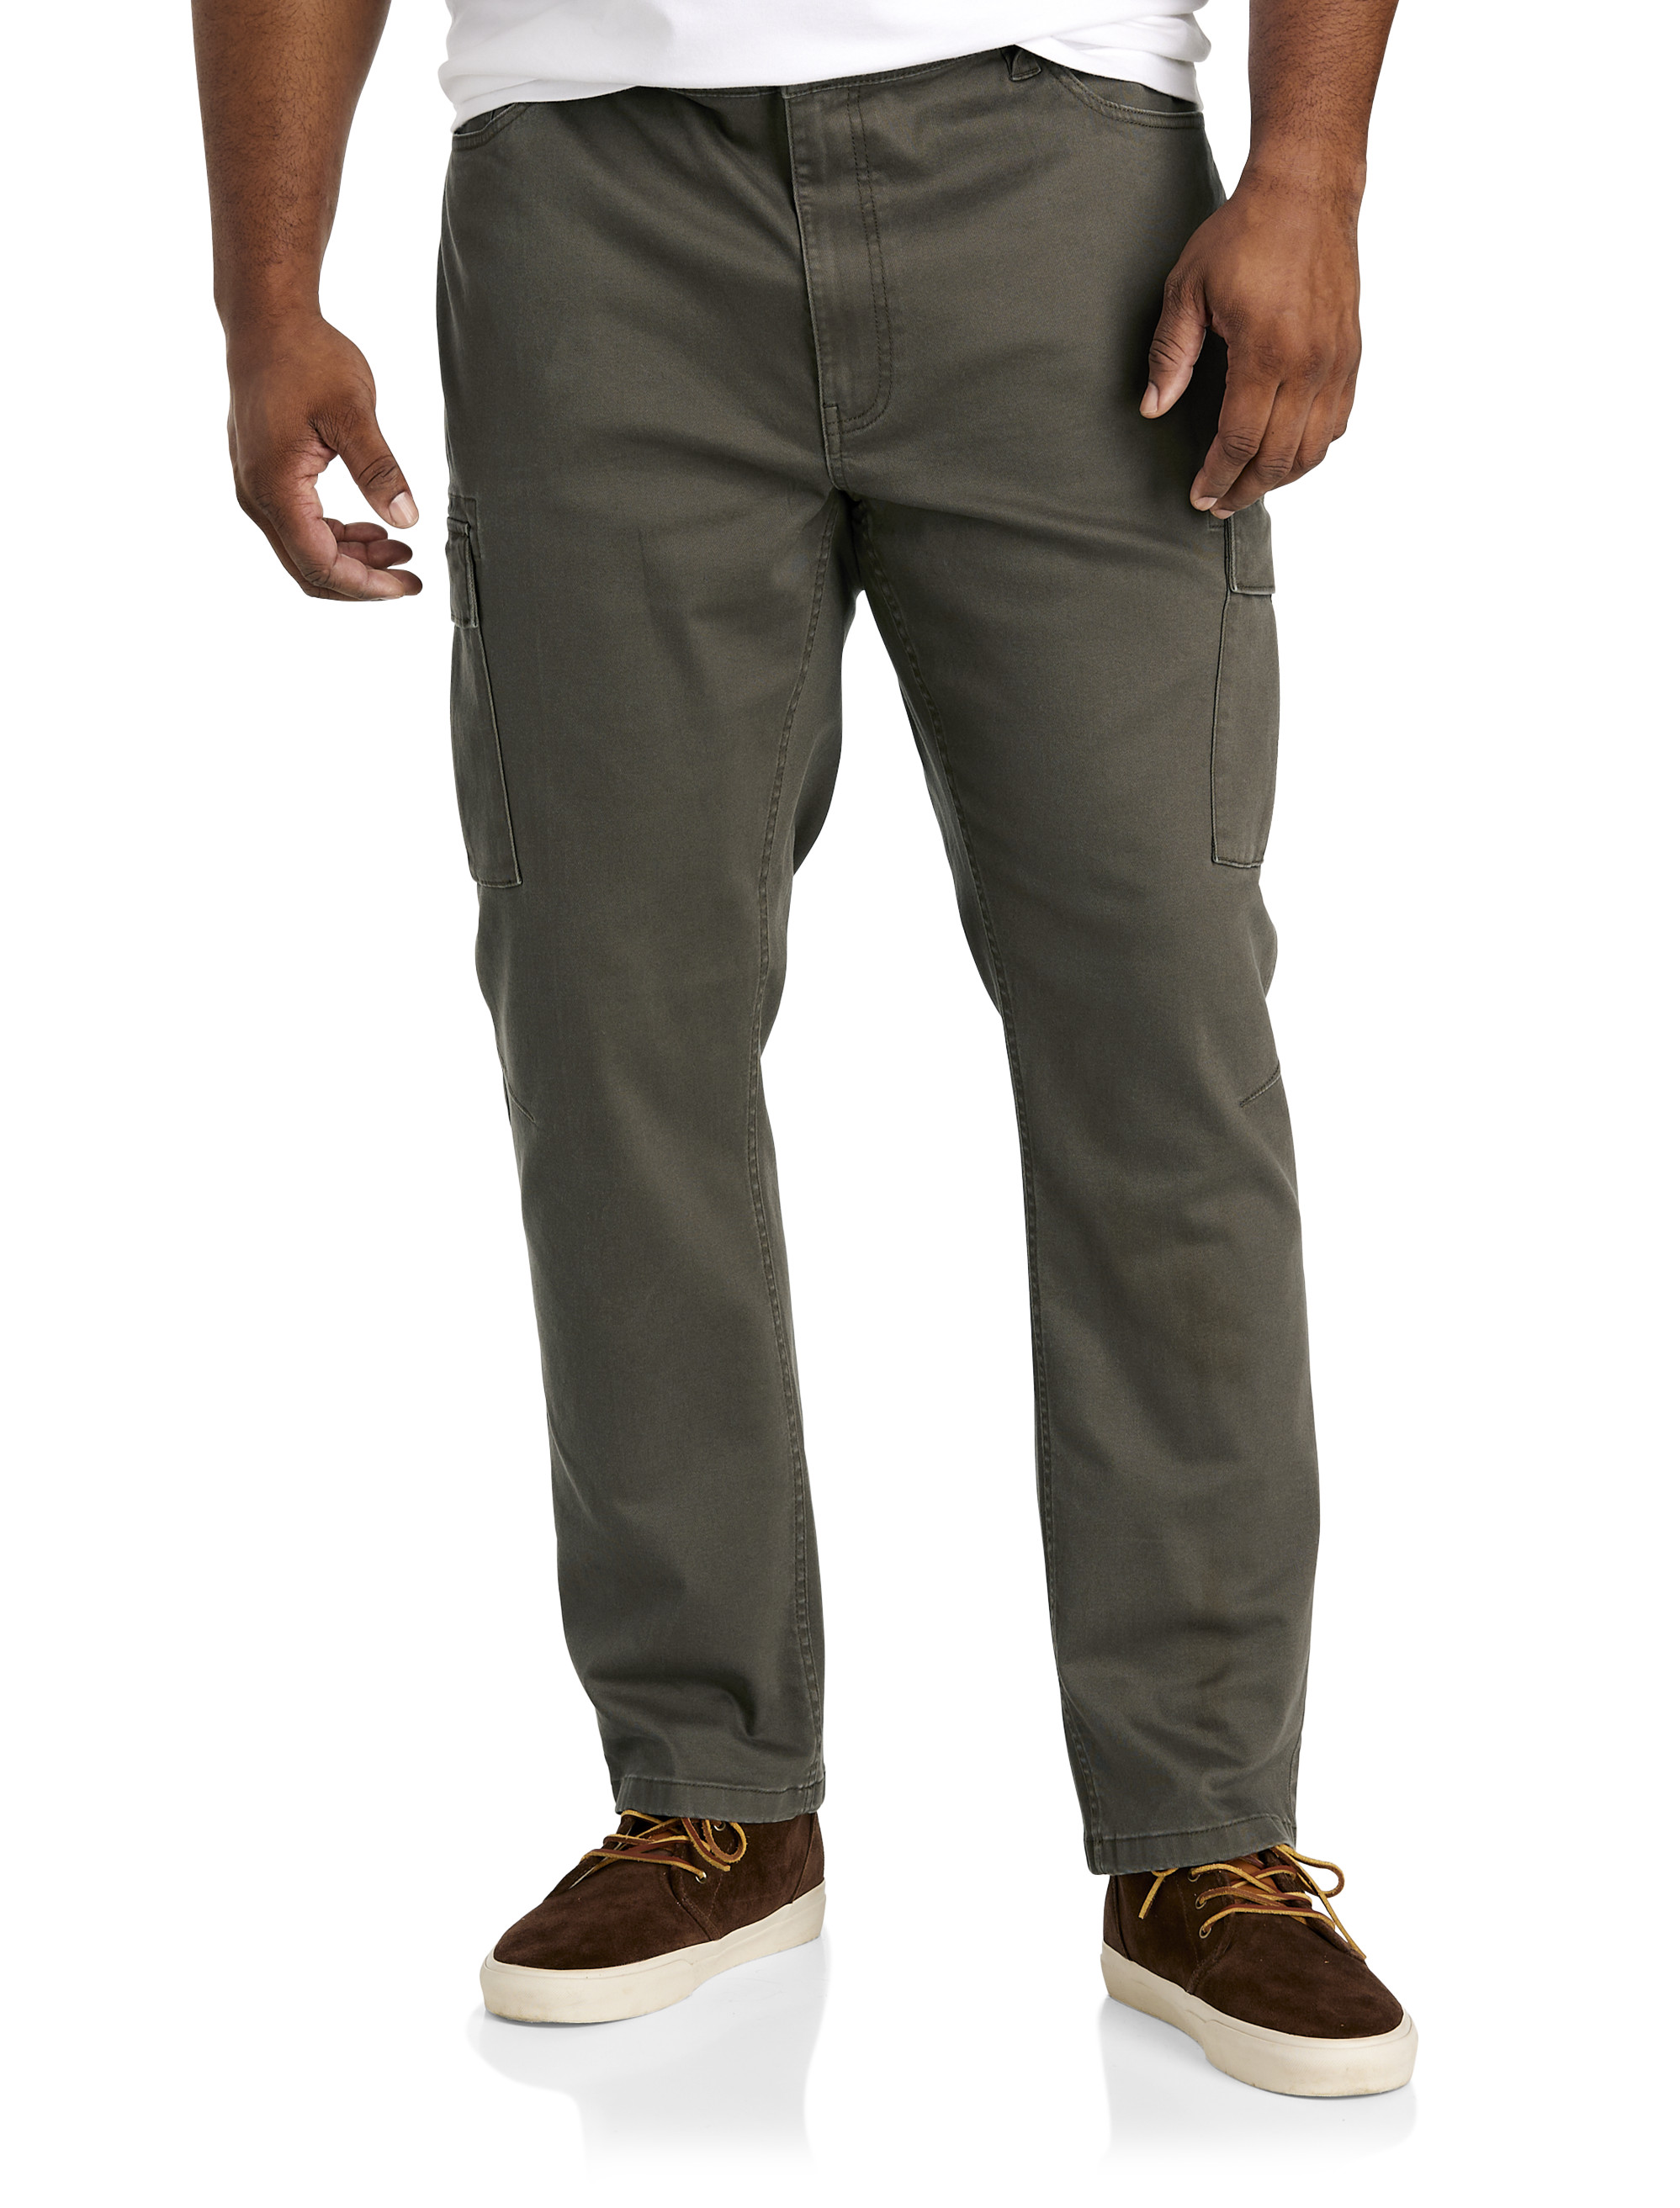 Mens Cargo Camo Pants Multi Pocket Lightweight Army Regular Fit Camo Green  44x30